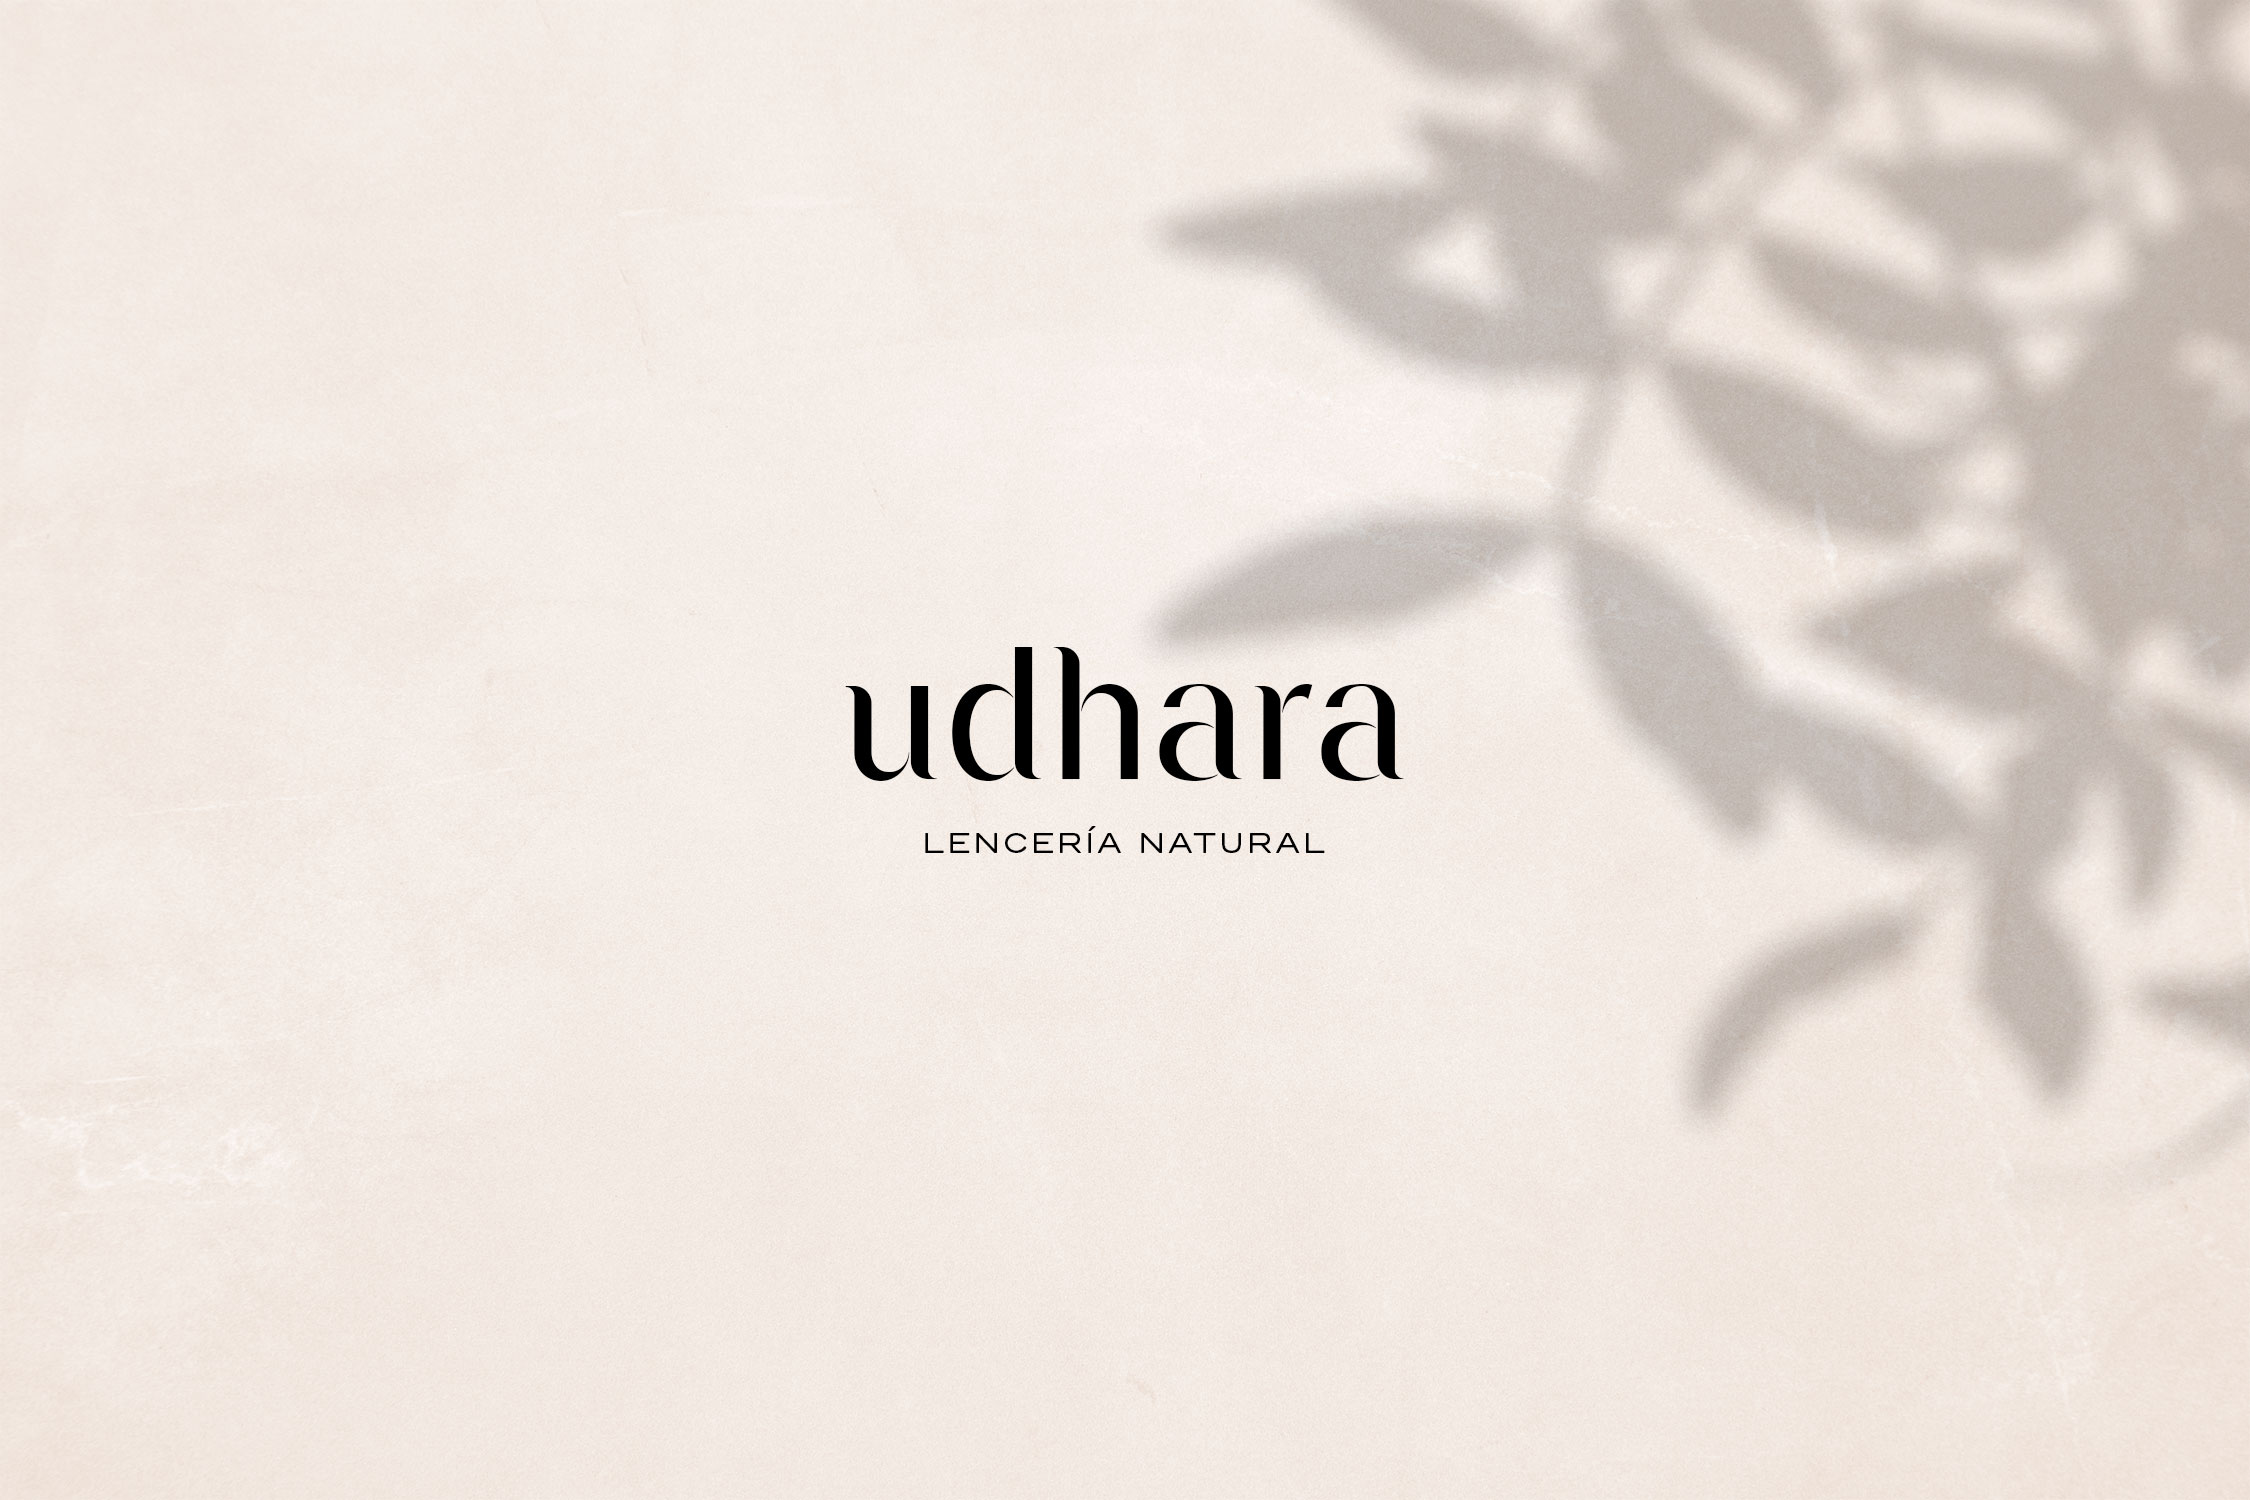 Udhara-lenceria-natural-branding-diseno-marca-estudio-marlo-11